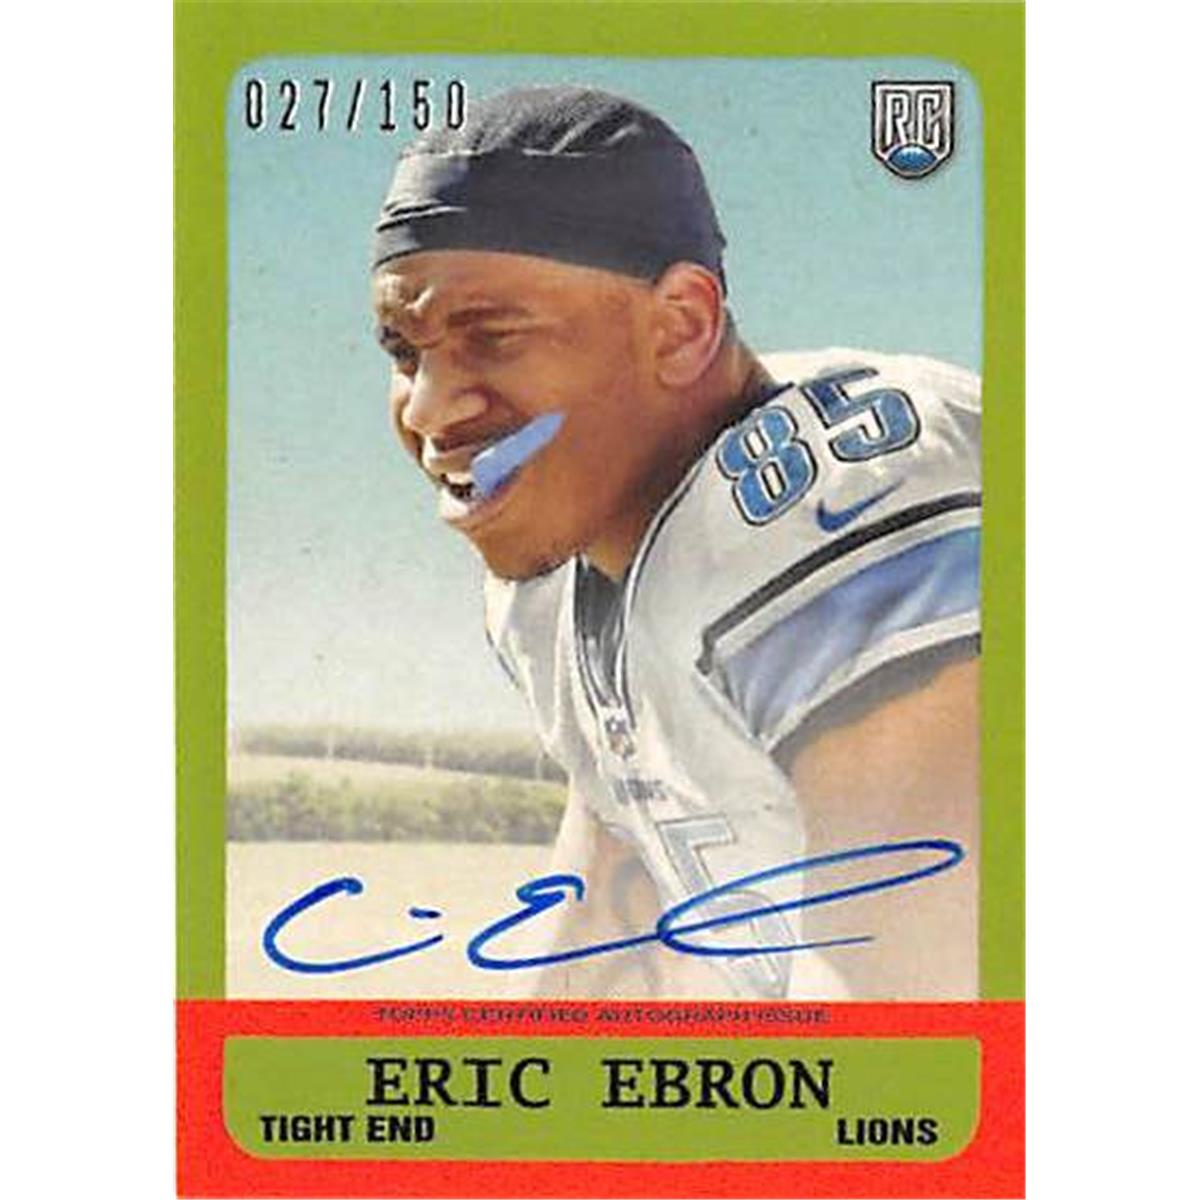 Picture of Autograph Warehouse 377980 Eric Ebron Autographed Football Card - Detroit Lions 2015 Topps Rookie Mini No.232 LE 27-150